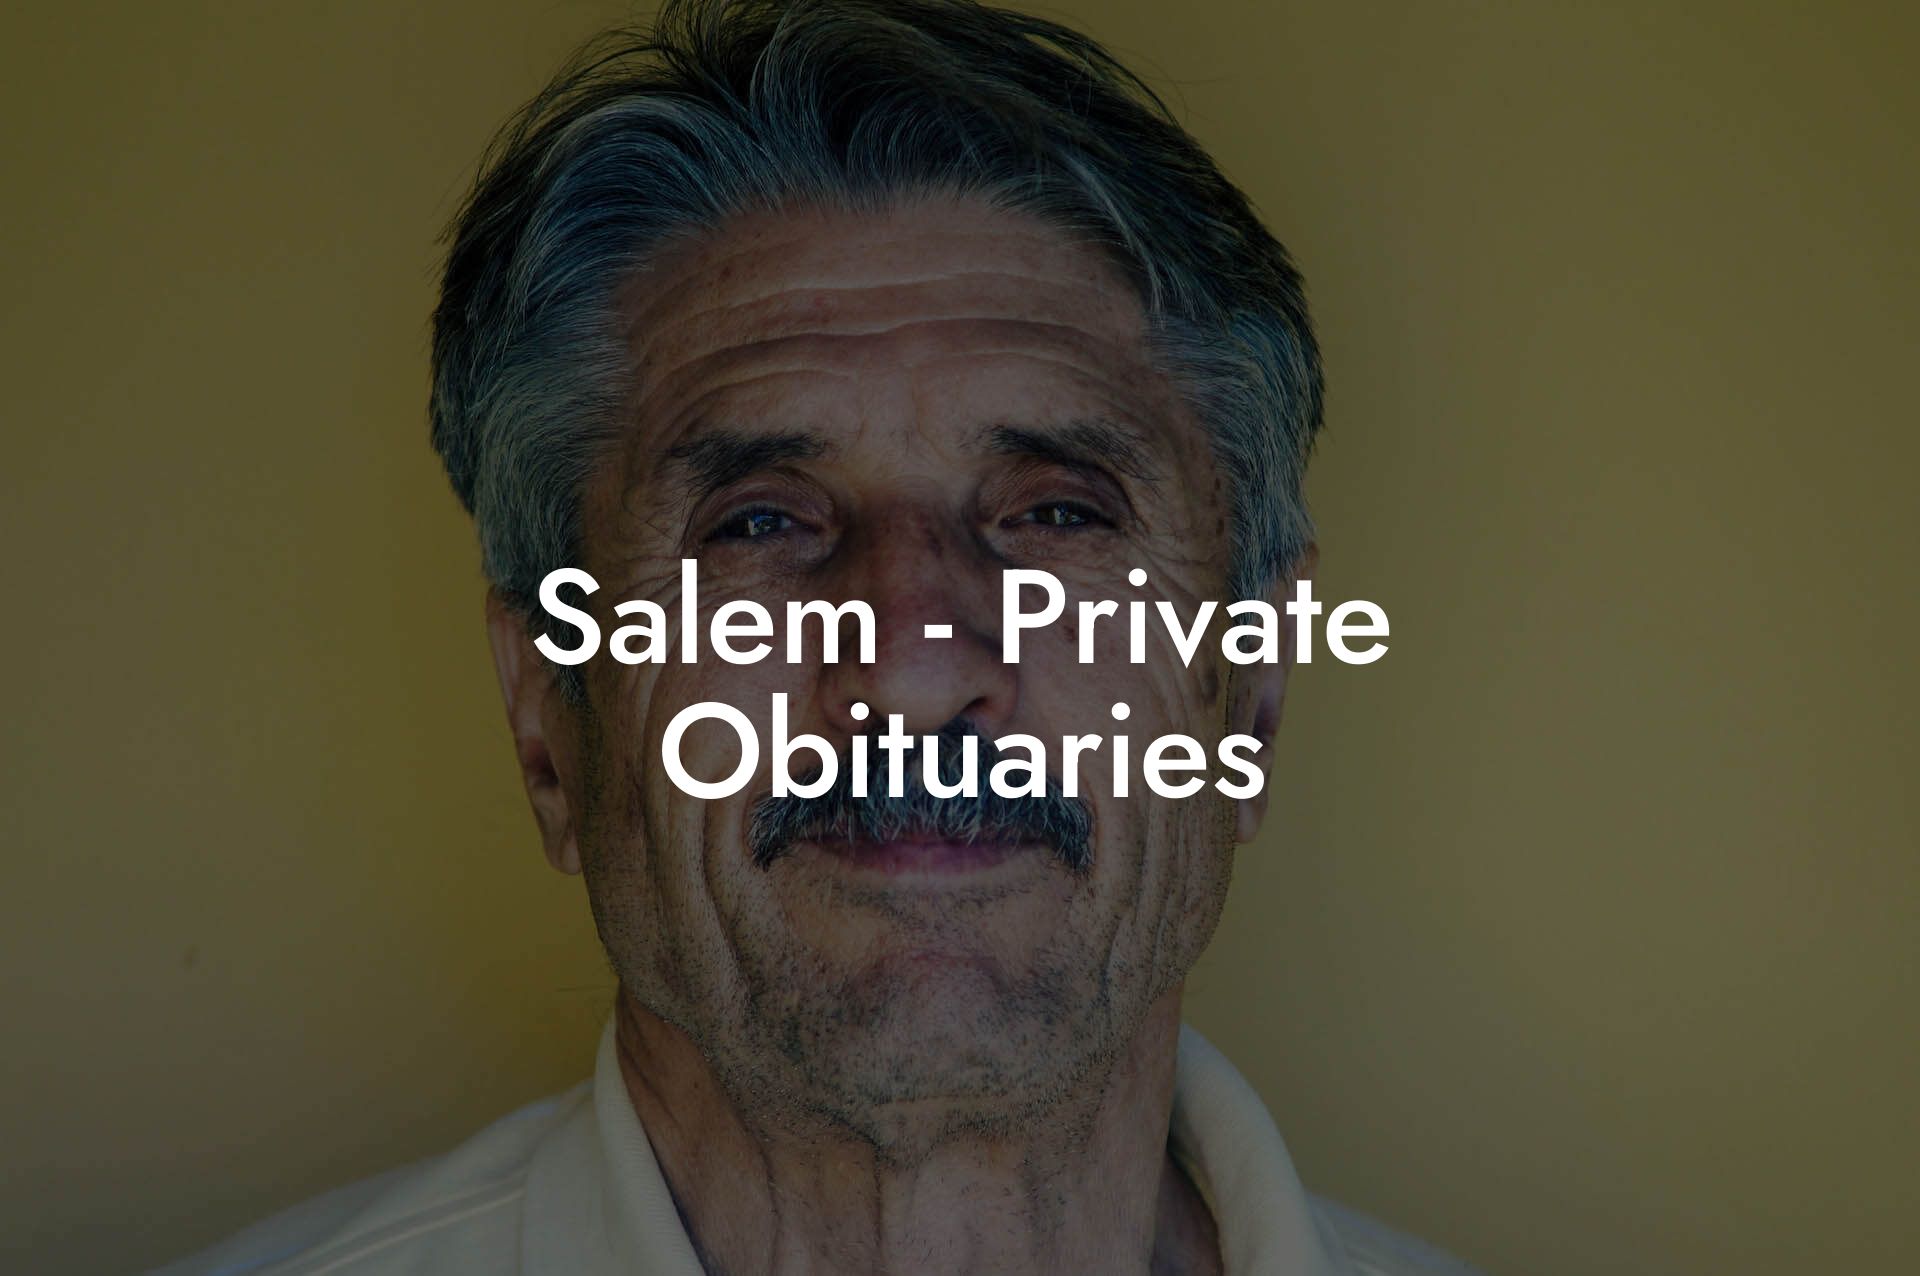 Salem - Private Obituaries